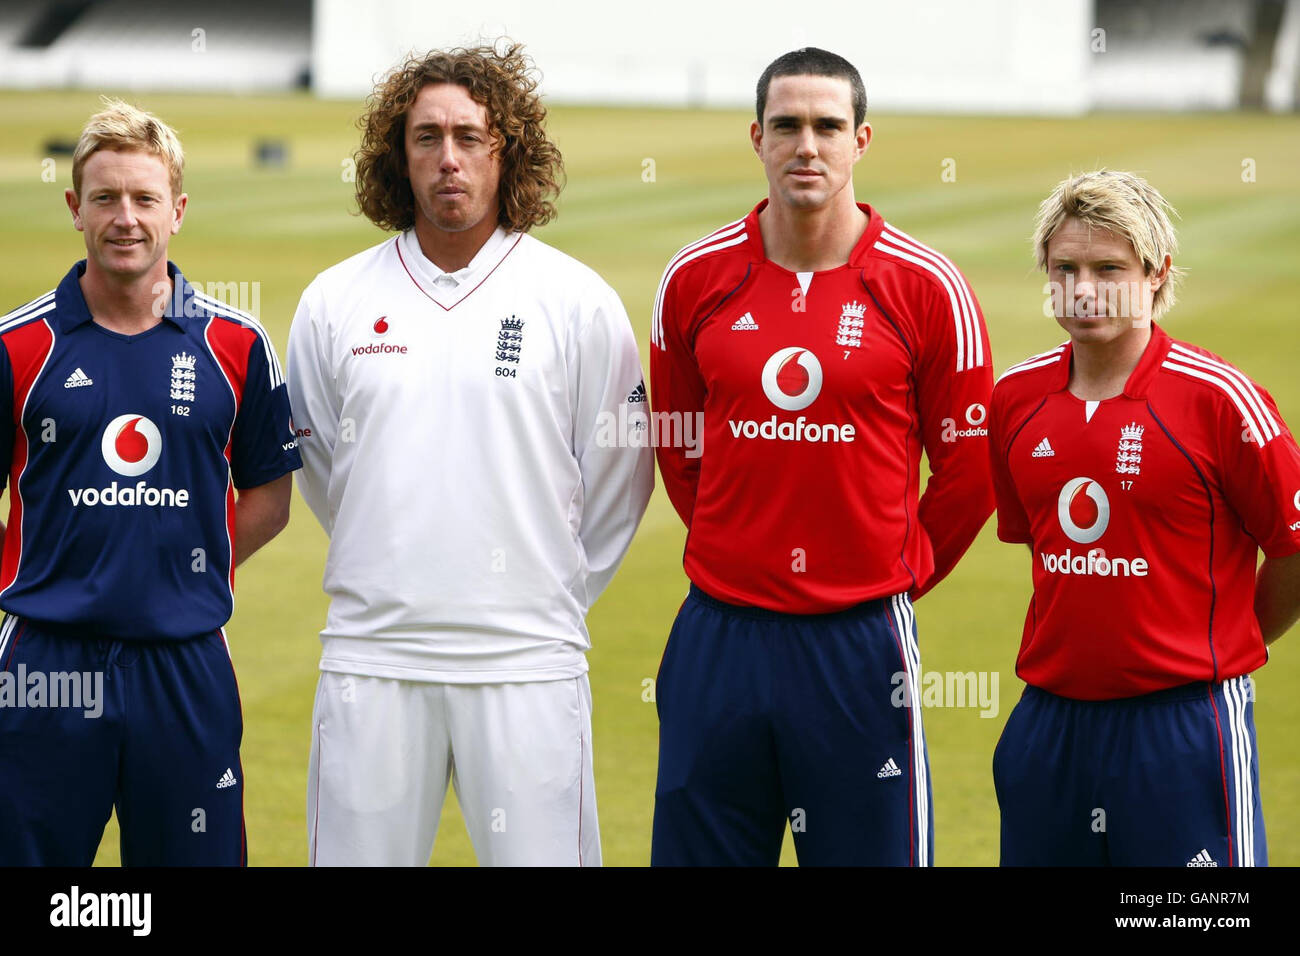 childs england cricket shirt